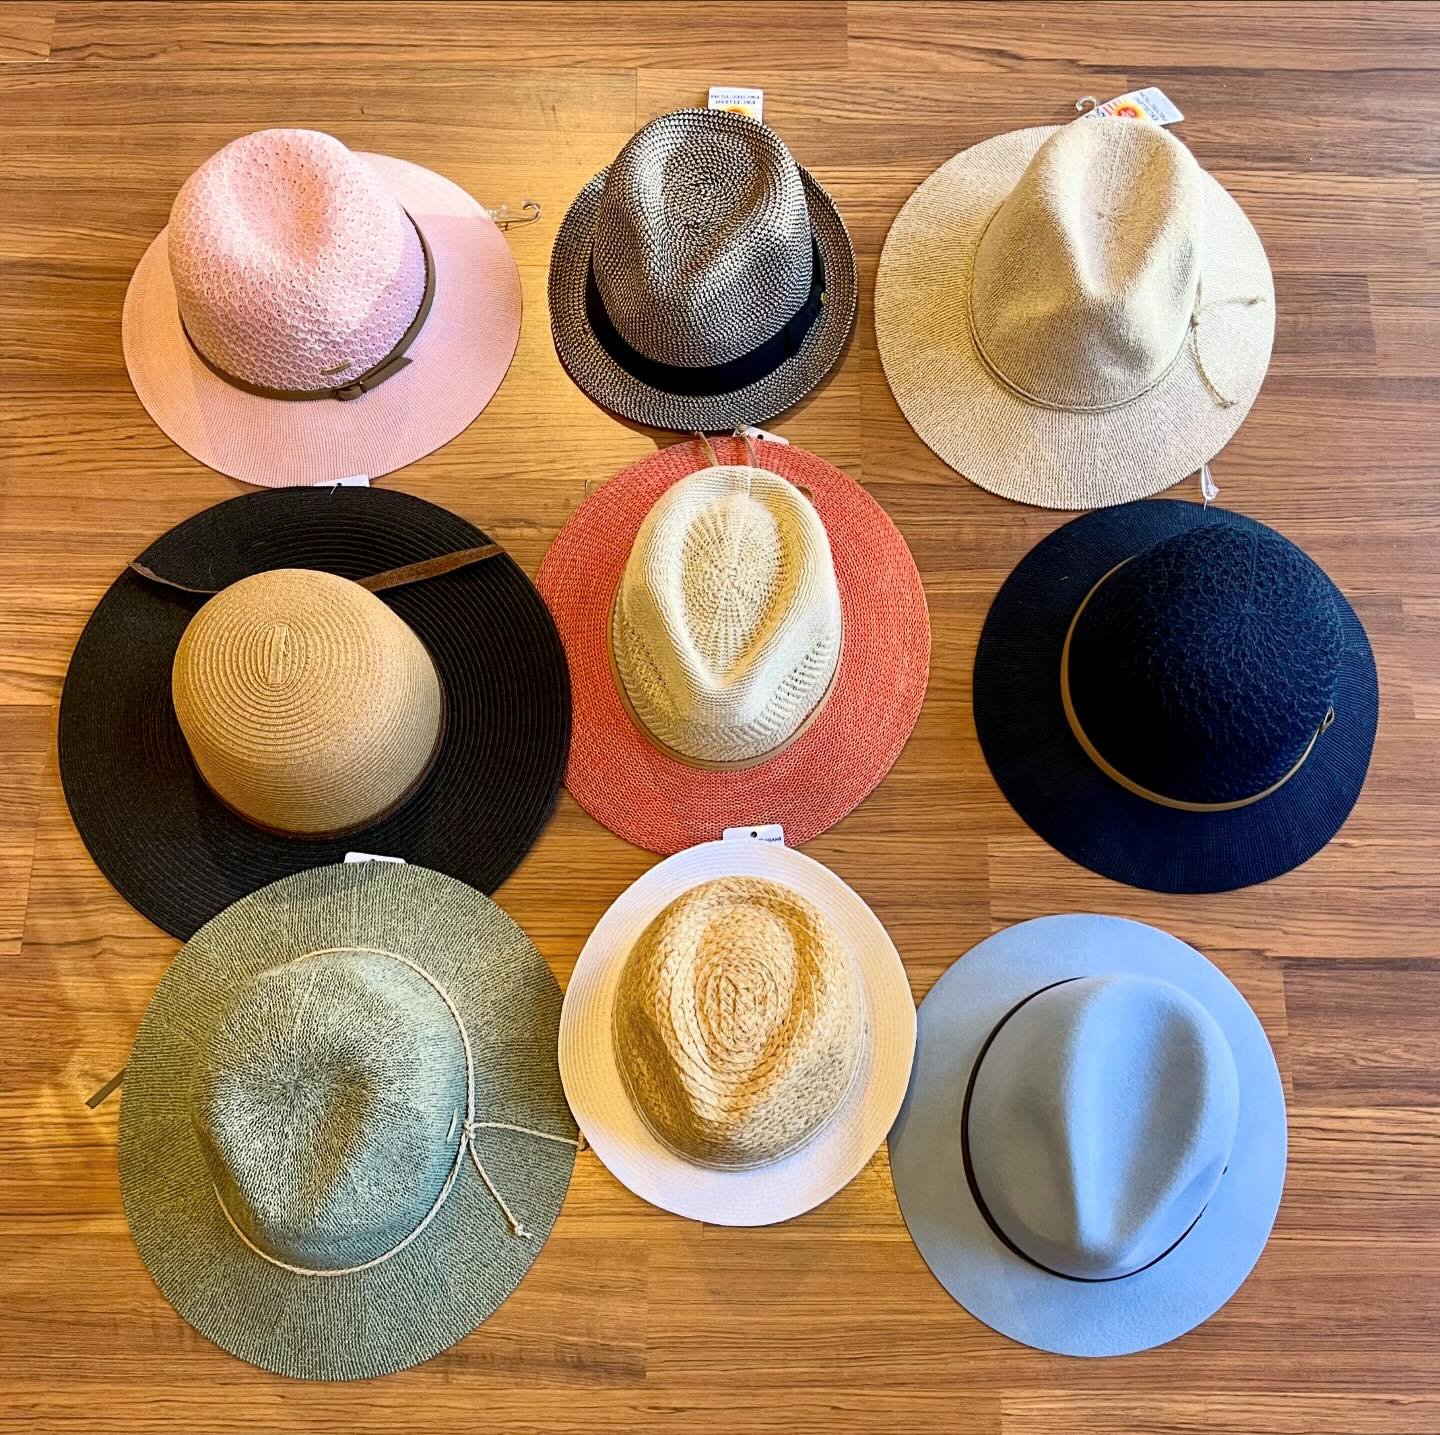 We got a new shipment of sun hats in! Come shop our selection! #newarrivals #sunhats #shoplocal #theresnoplacelikehome #downtowndurango #durango #colorado